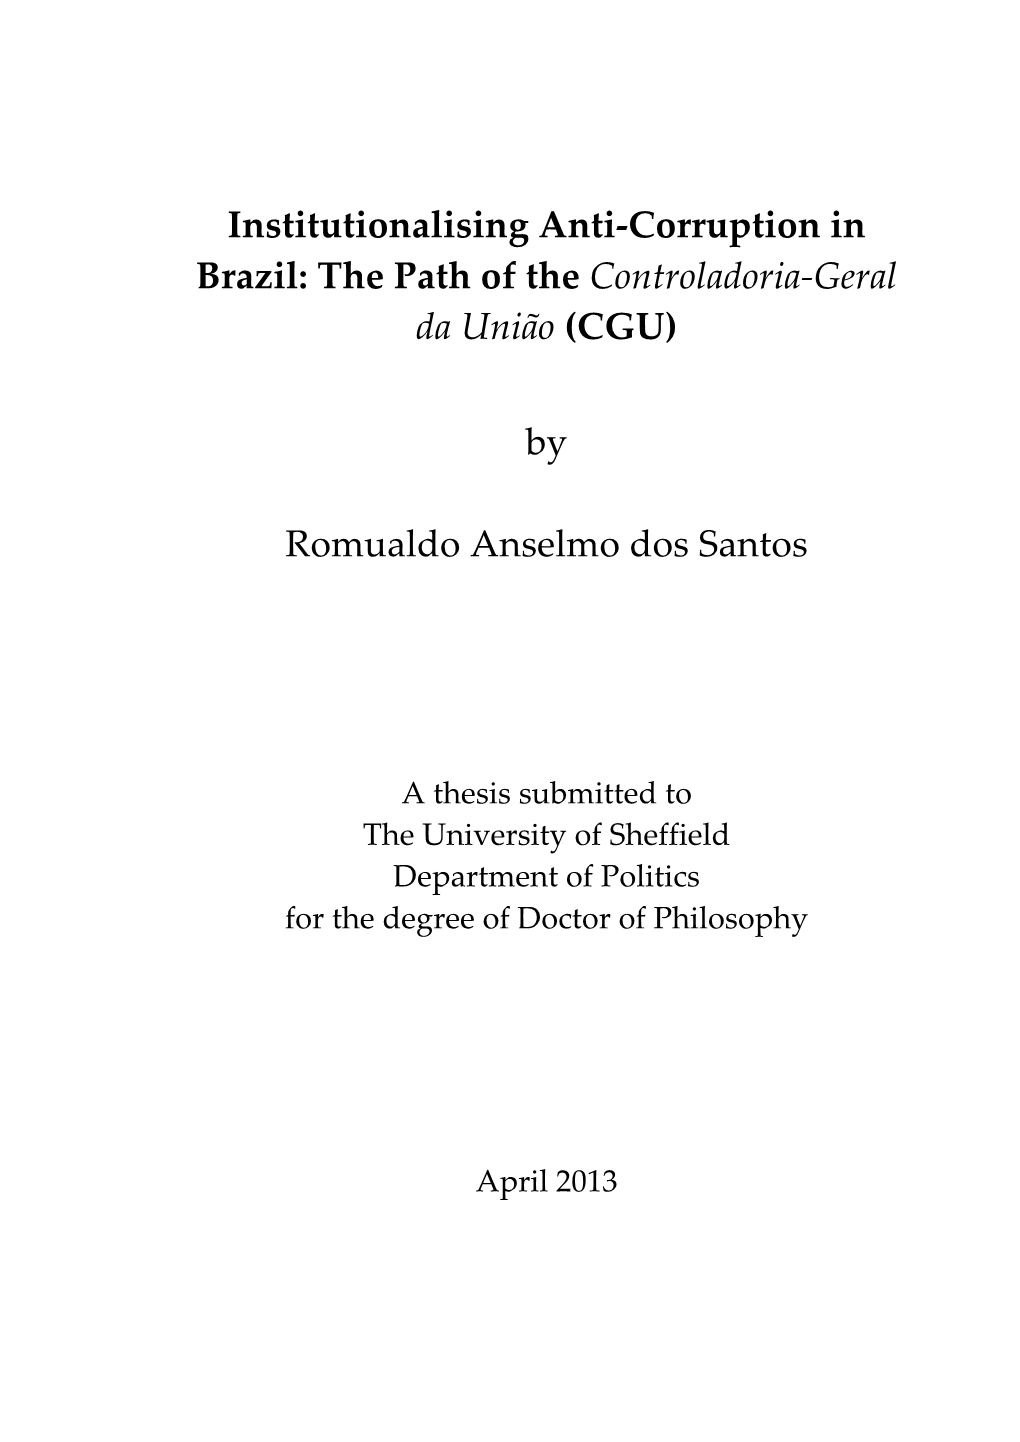 Institutionalising Anti-Corruption in Brazil